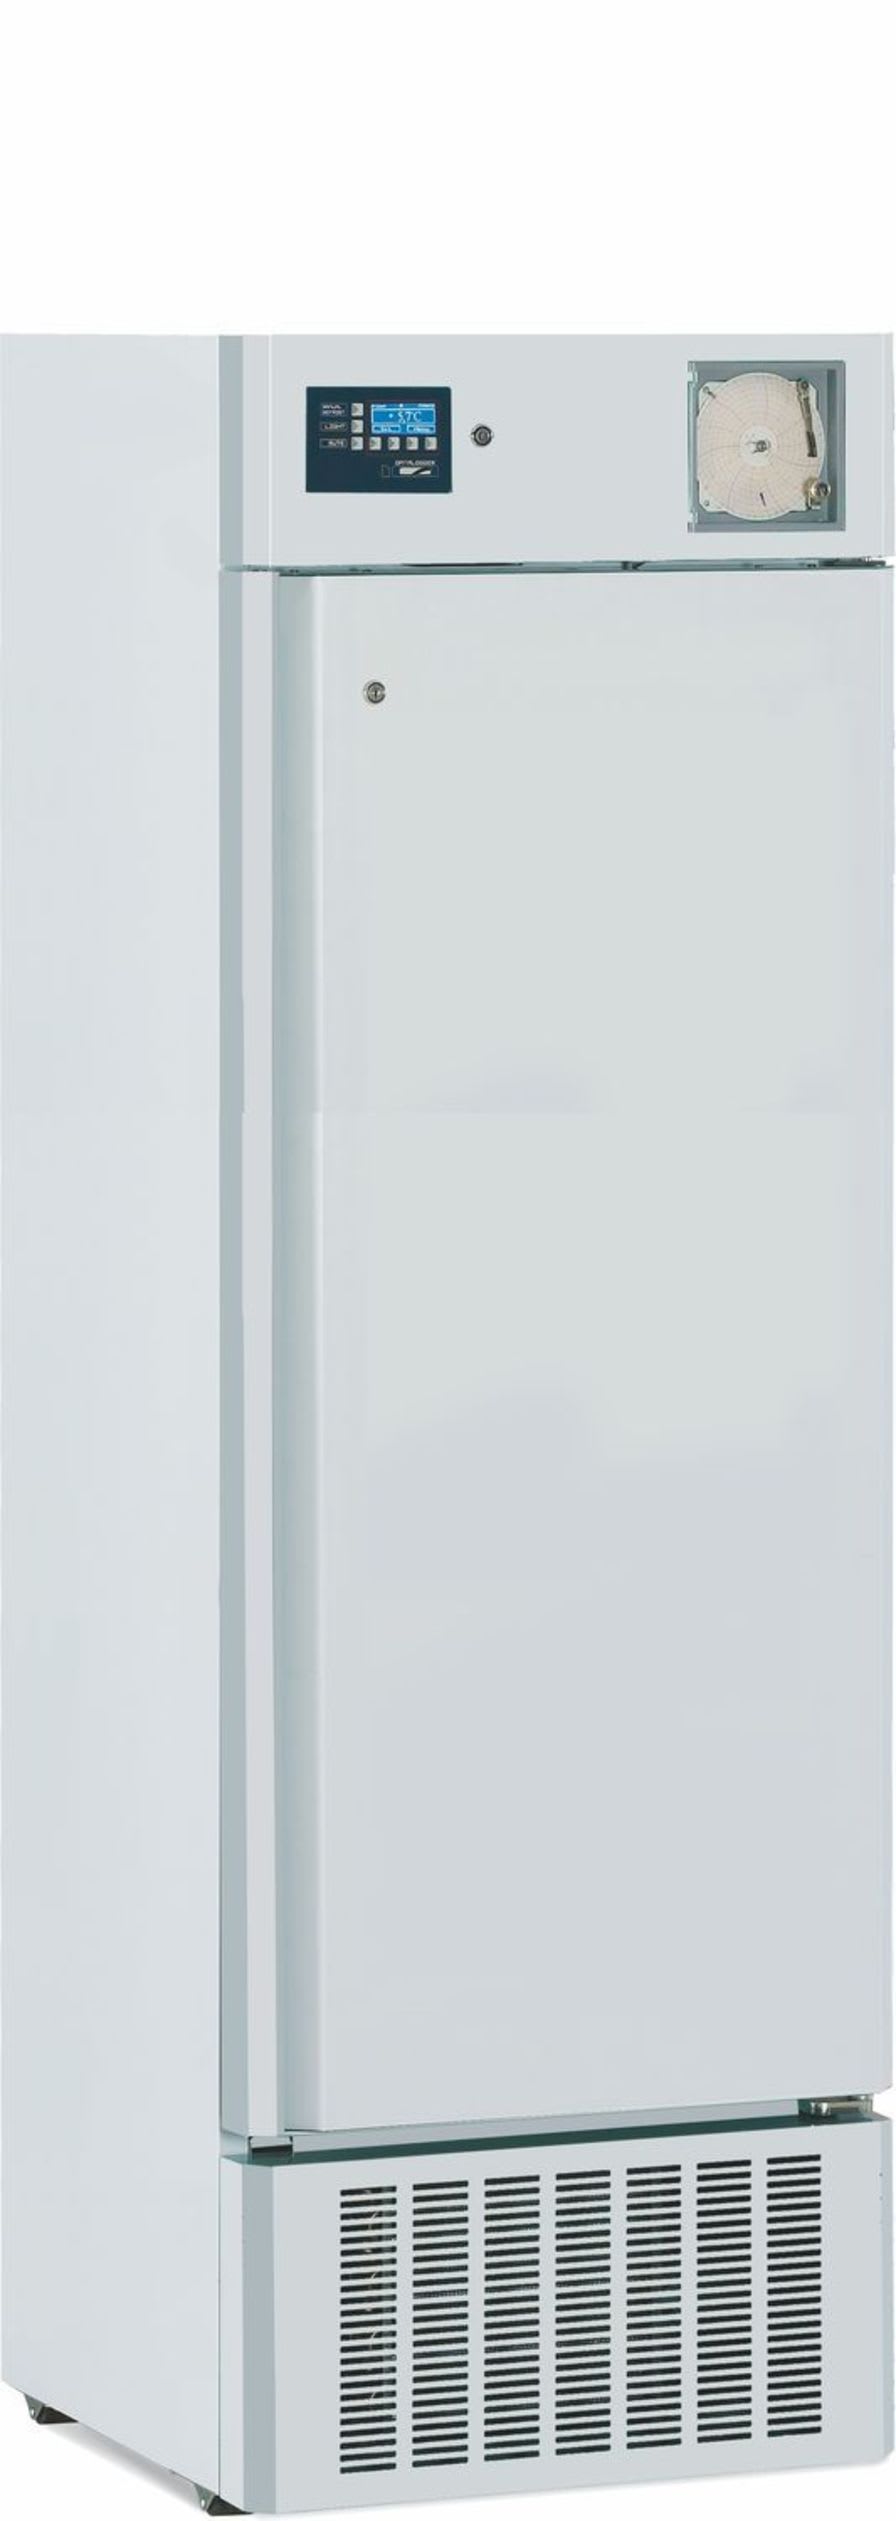 Laboratory refrigerator / cabinet / 1-door 2 - 10°C, 300 L | DS-FS30 Desmon Spa